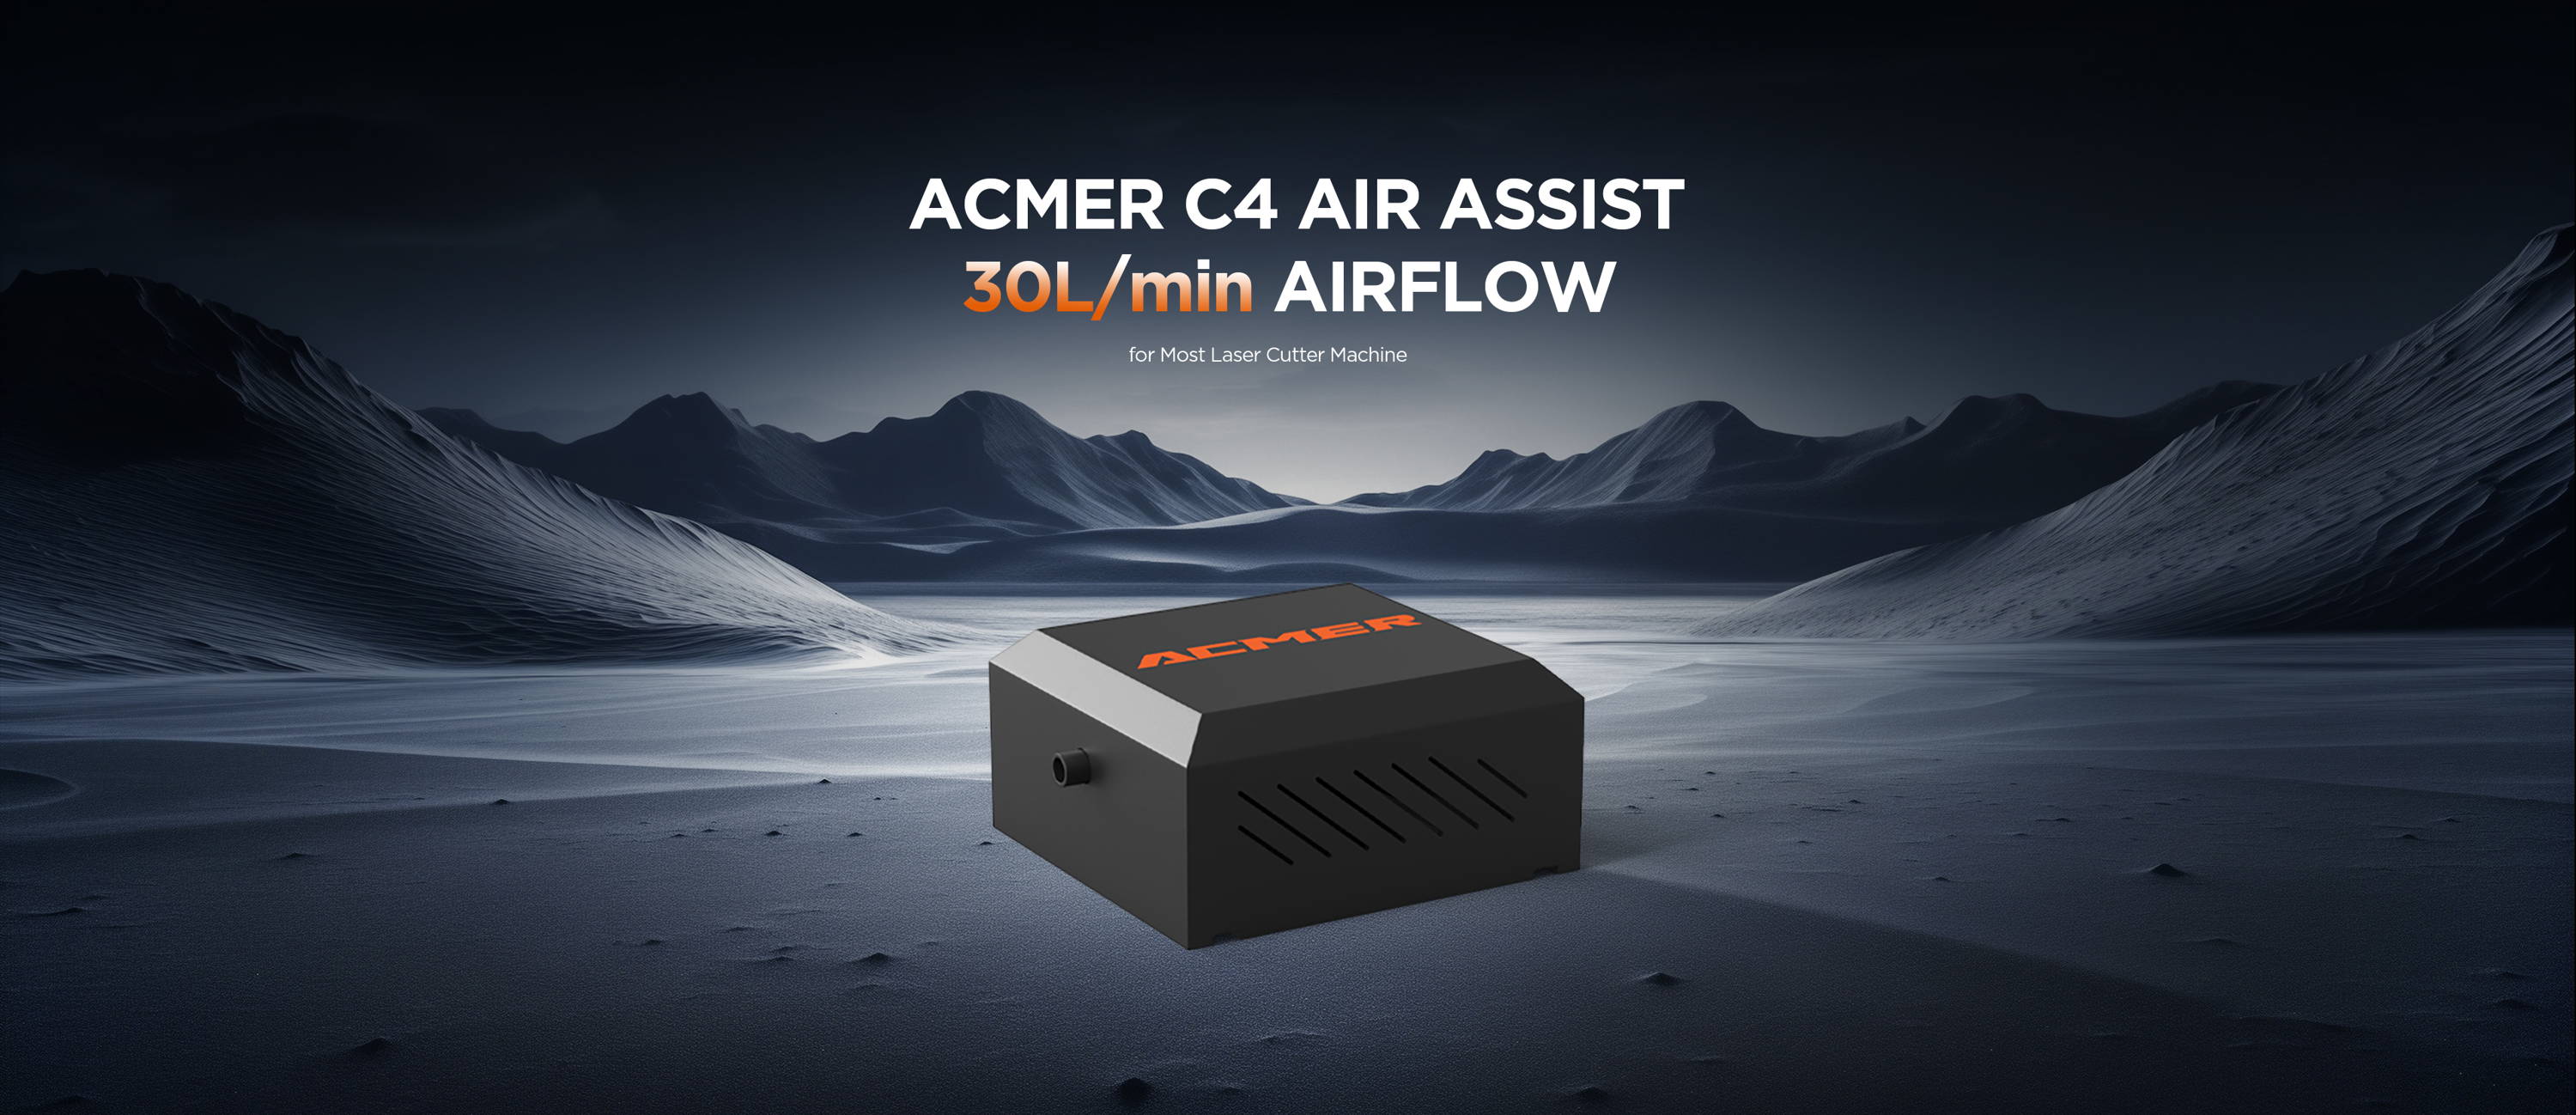 ACMER C4 laser air assist pump